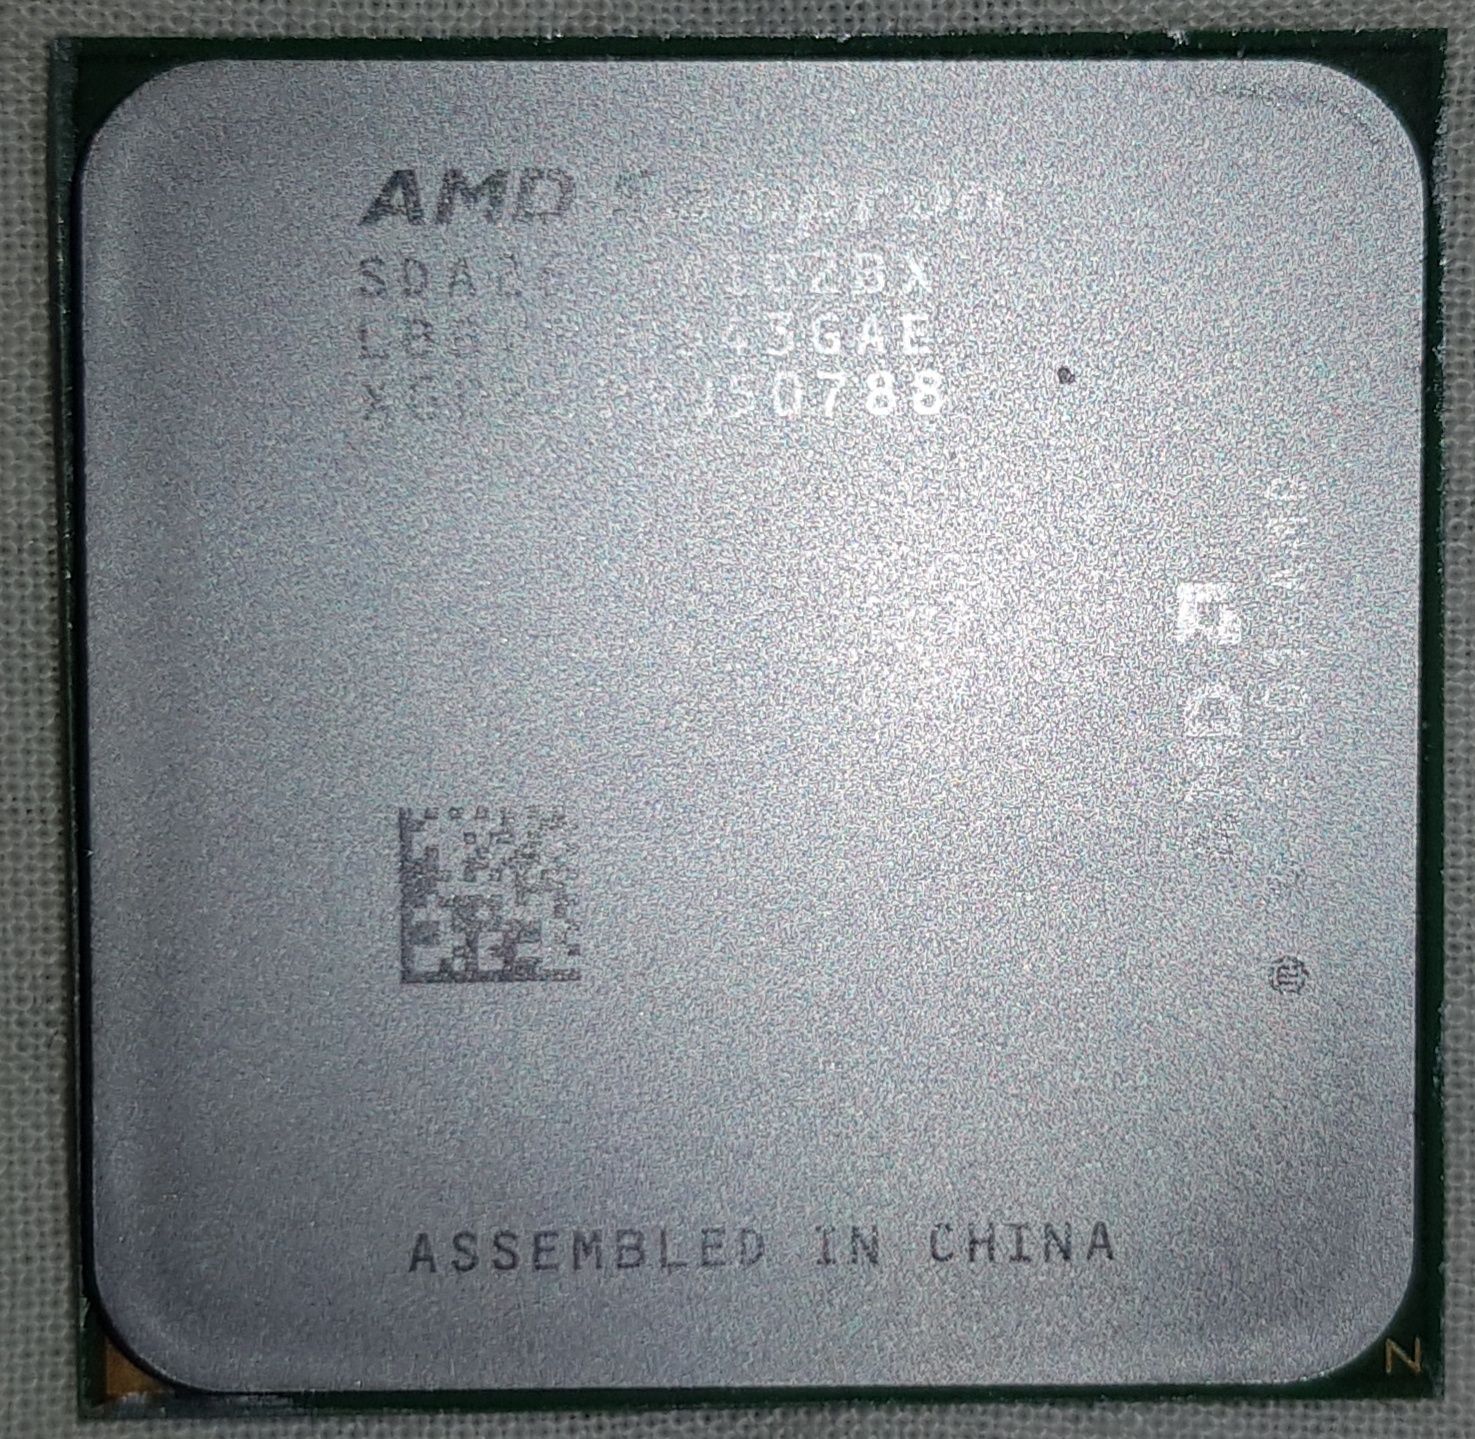 procesor socket 754 amd athlon 64